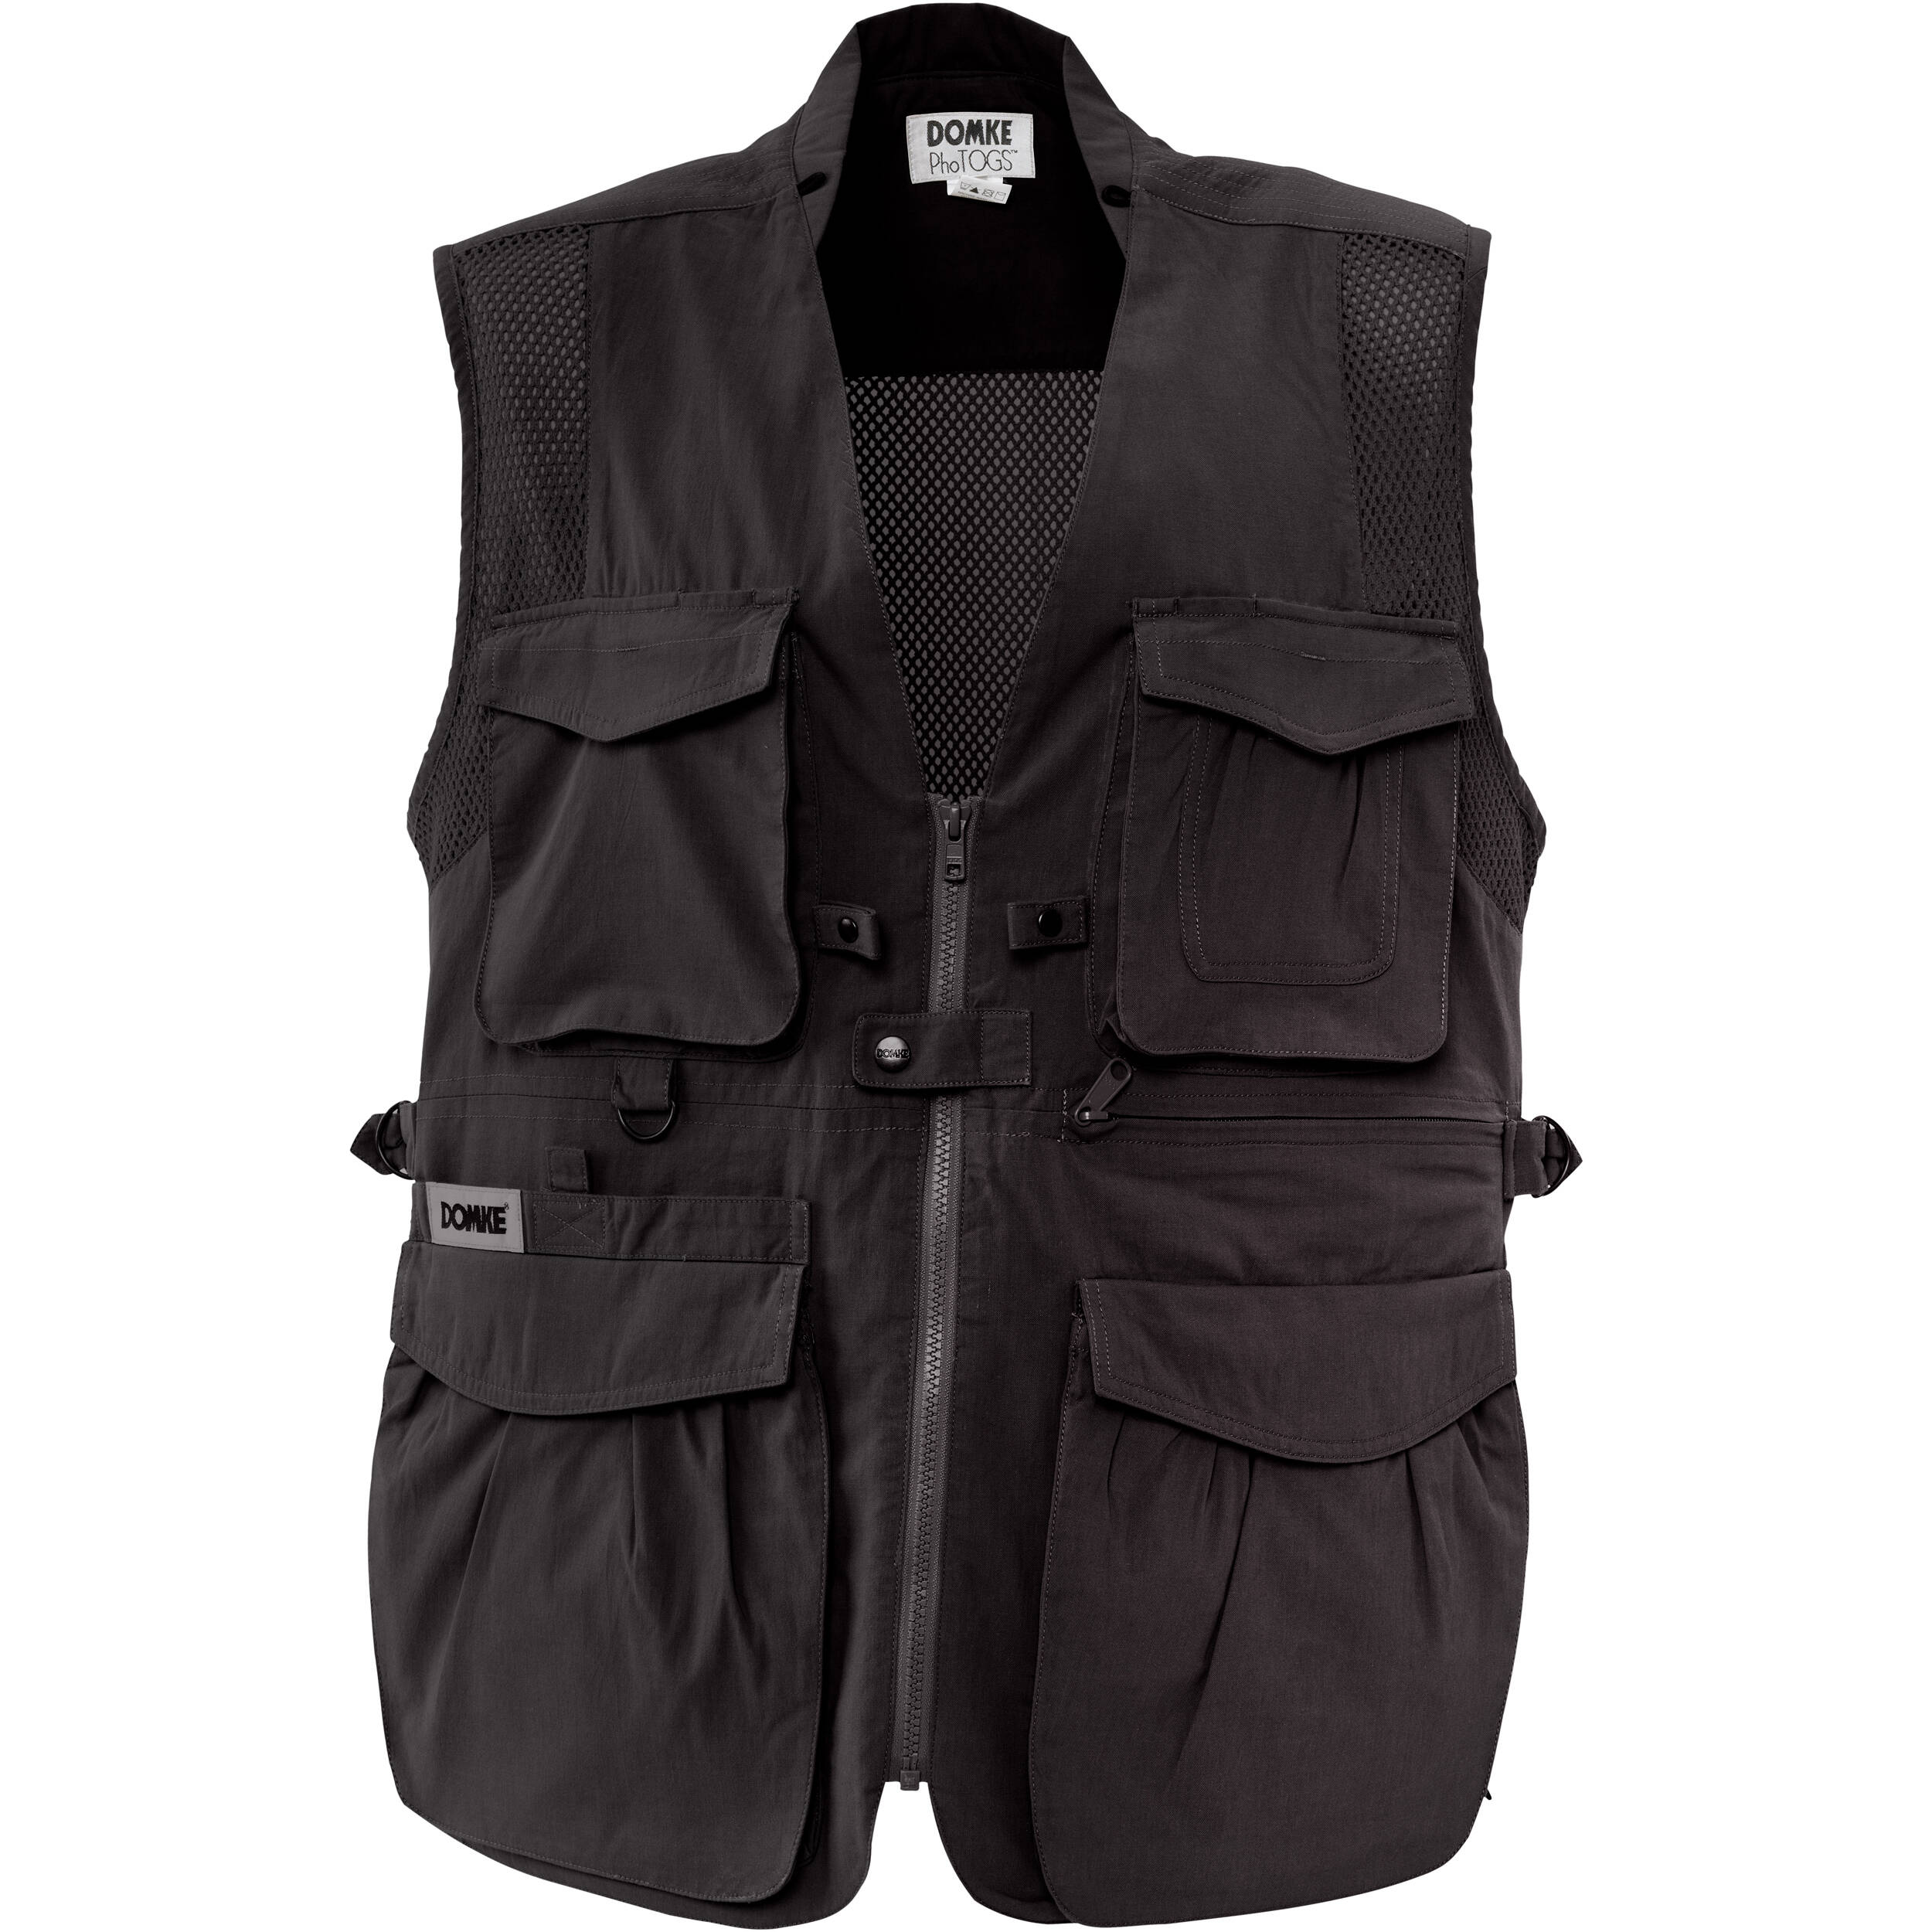 Domke PhoTOGS Vest (Large, Black)